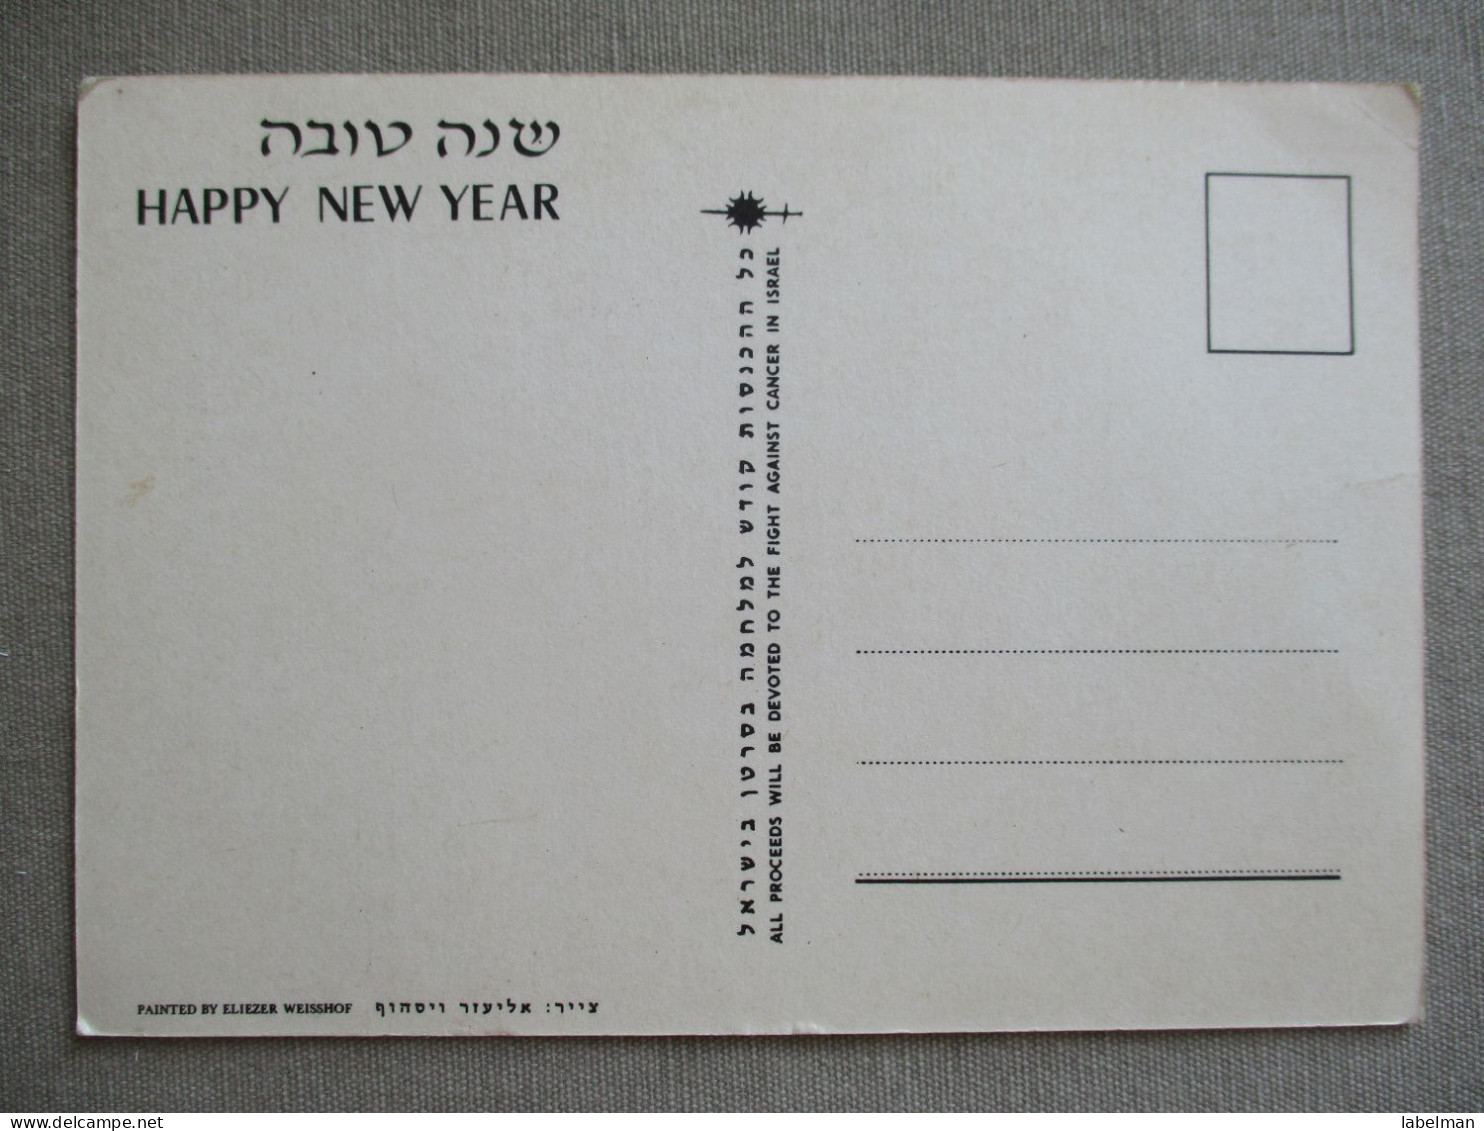 ISRAEL FIGHT CANCER ASSOCIATION SHANA TOVA NEW YEAR JUDAICA LIONS GATE JERUSALEM CARD POSTCARD CARTOLINA ANSICHTSKARTE - New Year